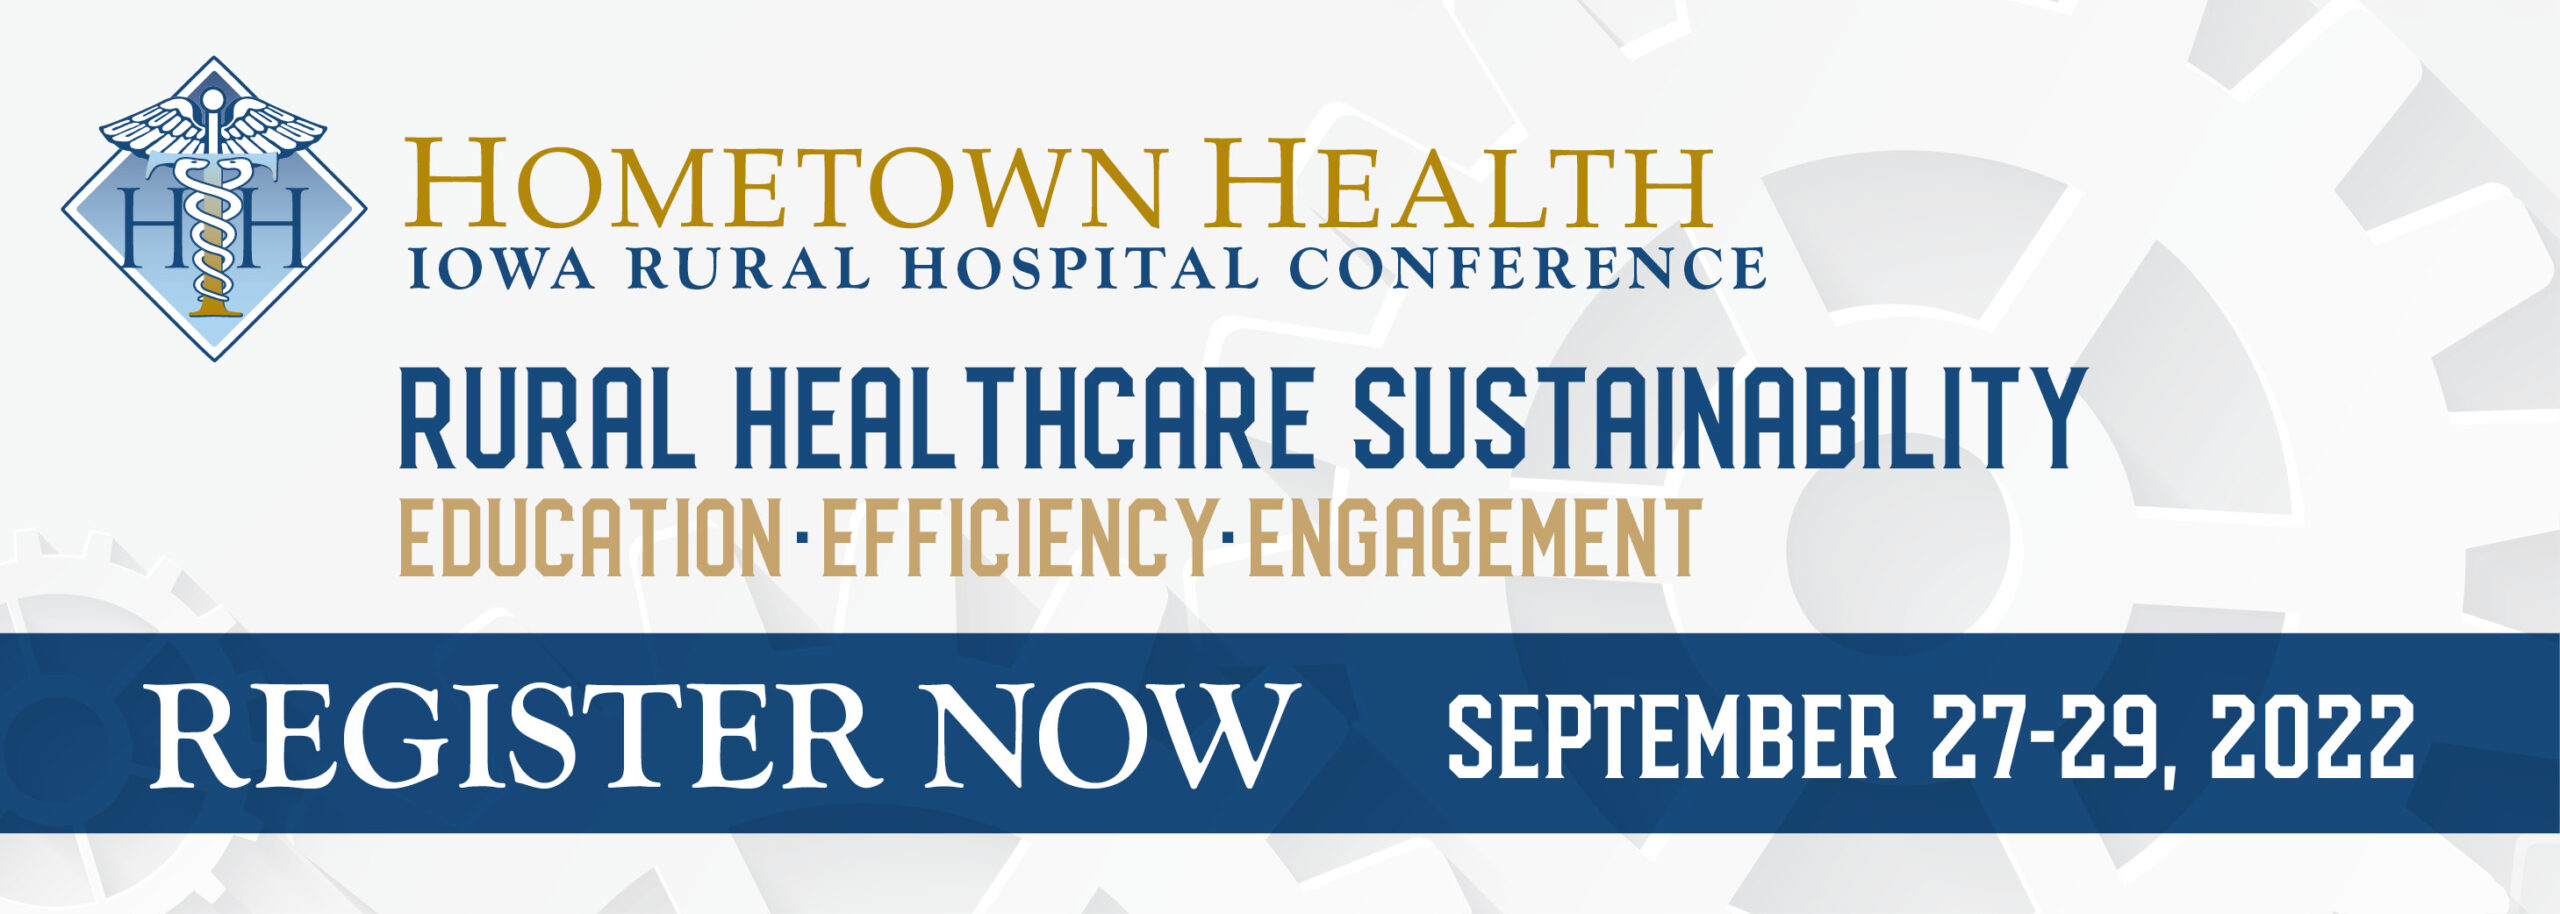 2022 Iowa Rural Hospital Conference | Hometown Health Online